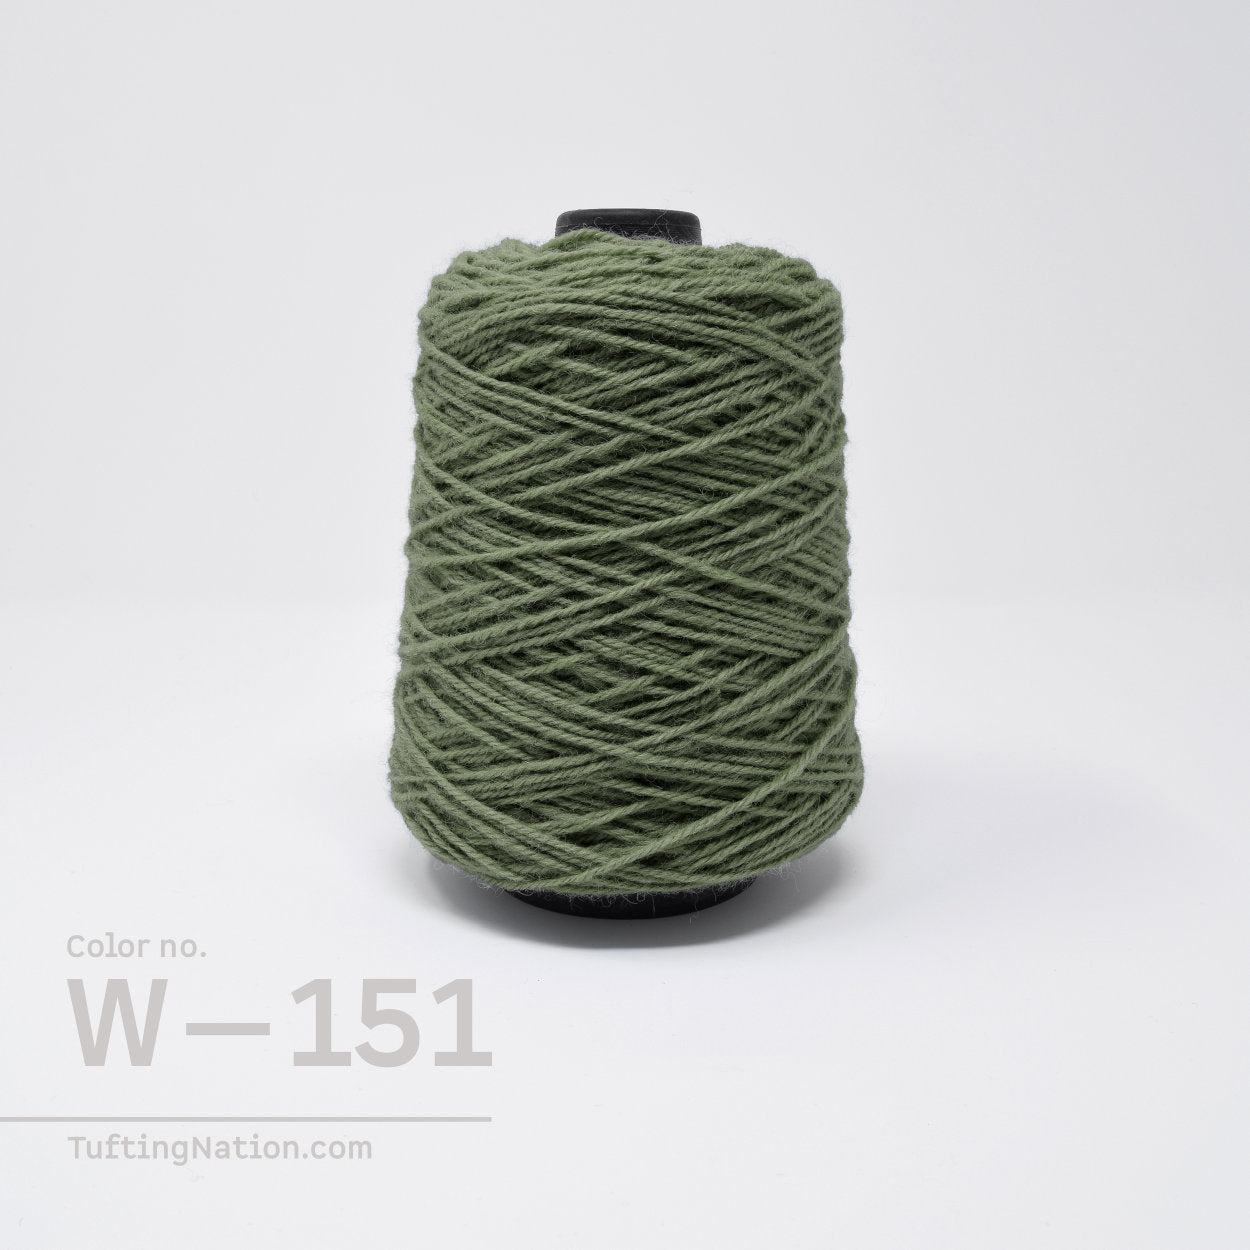 Green Tufting Gun Yarn on Spool for Rug Tufting and Rug Weaving | TuftingNation